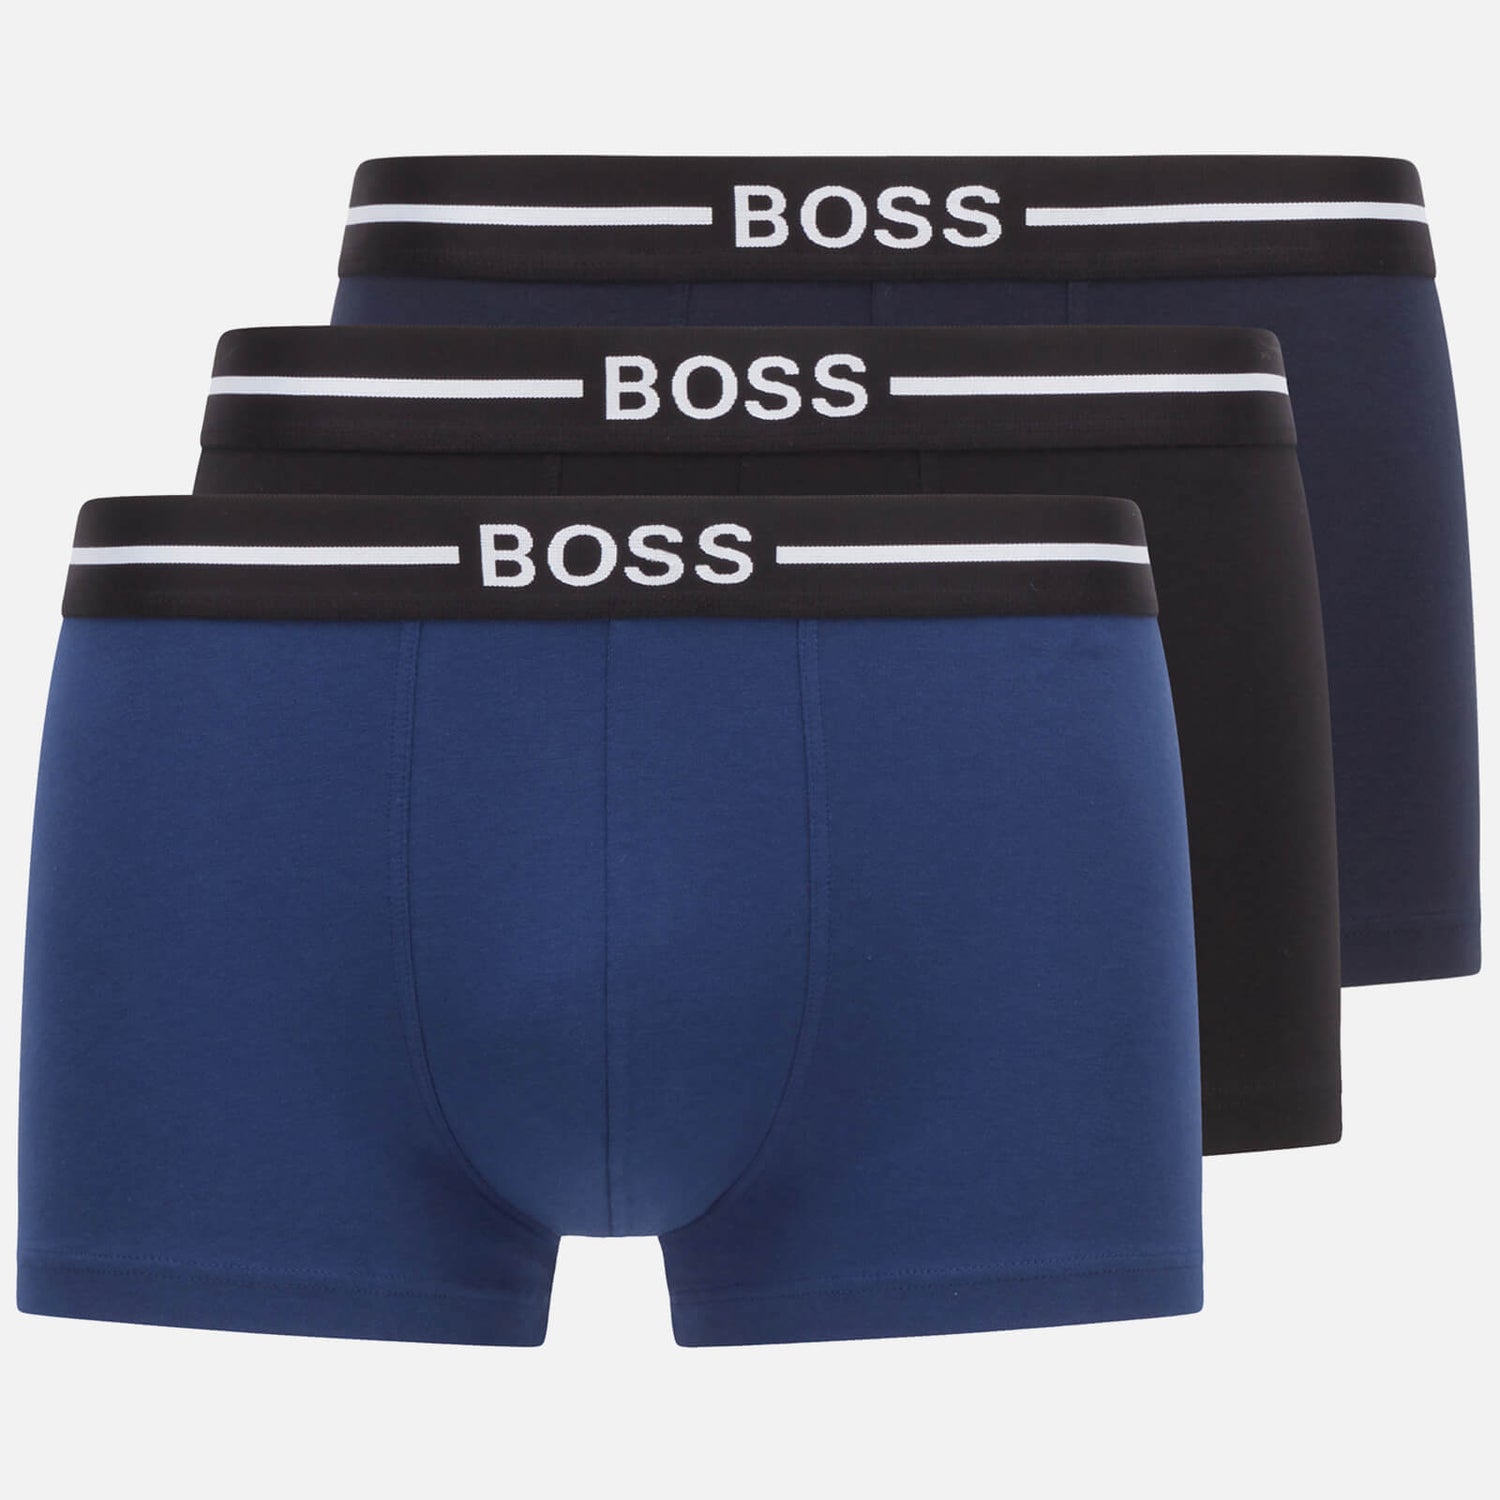 BOSS Bodywear Men's 3-Pack Organic Trunk Boxer Shorts - Black/Navy/Blue